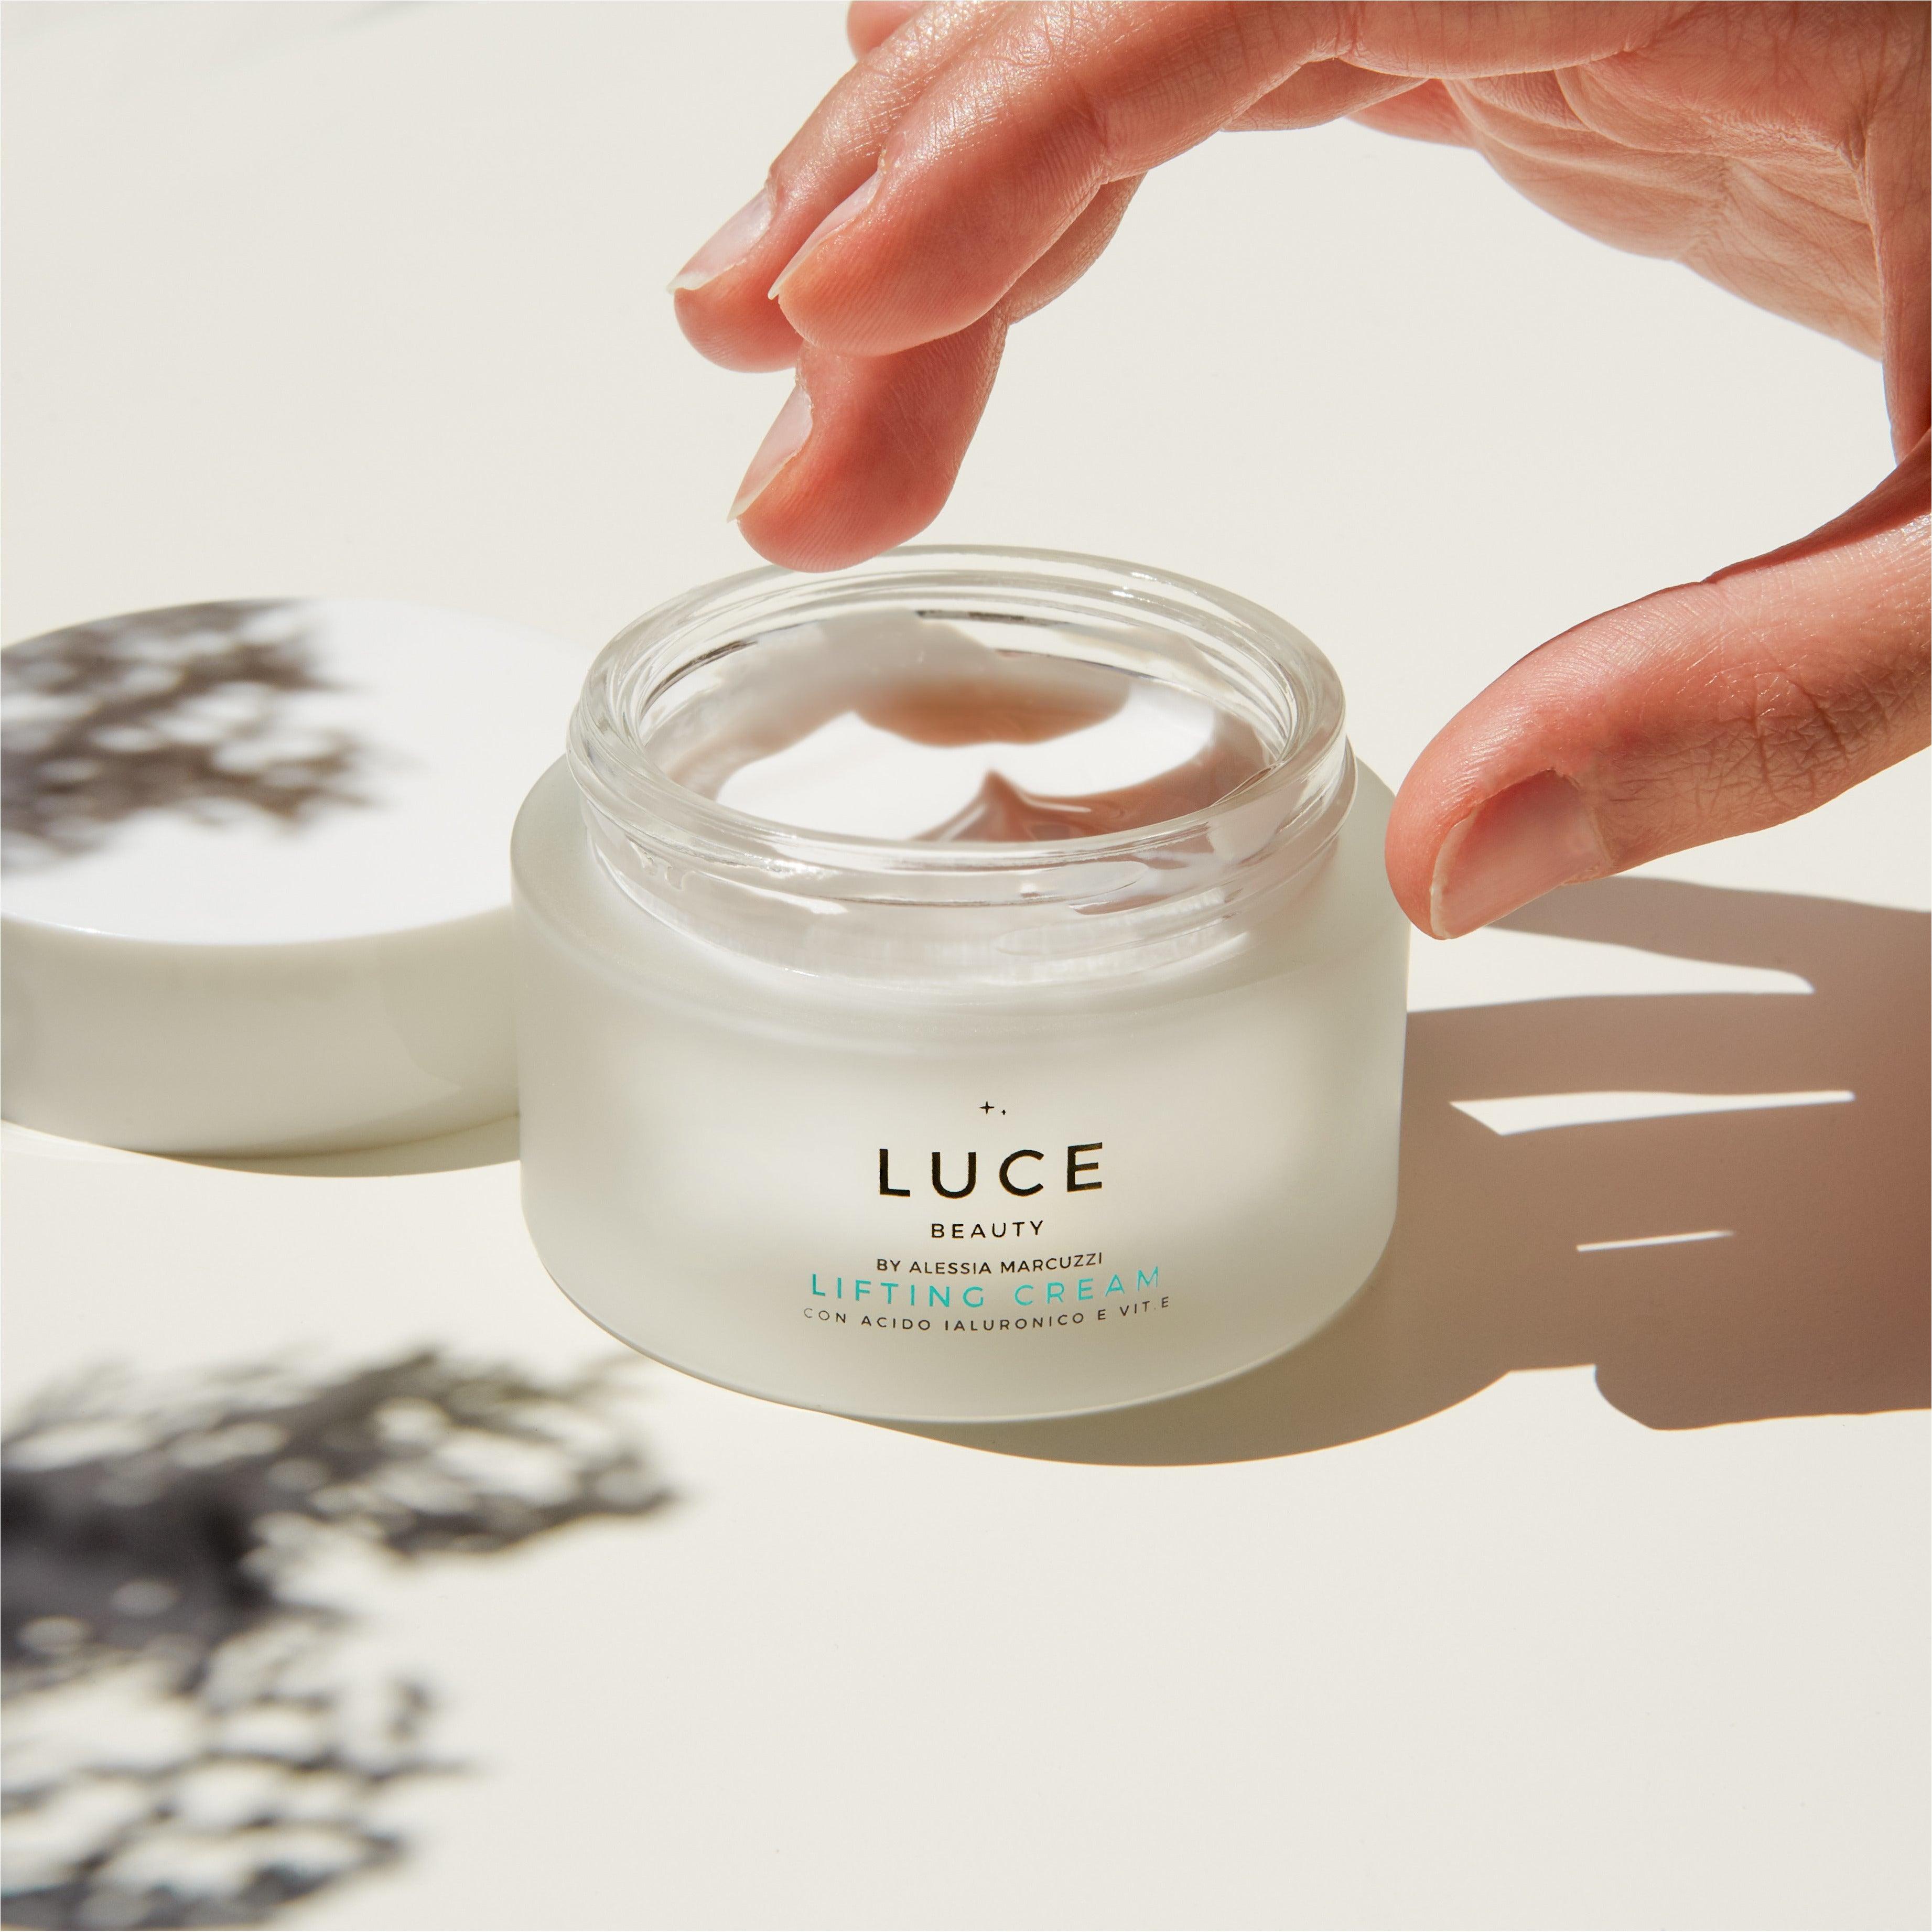 Lifting Cream - Applicazione - Luce Beauty by Alessia Marcuzzi